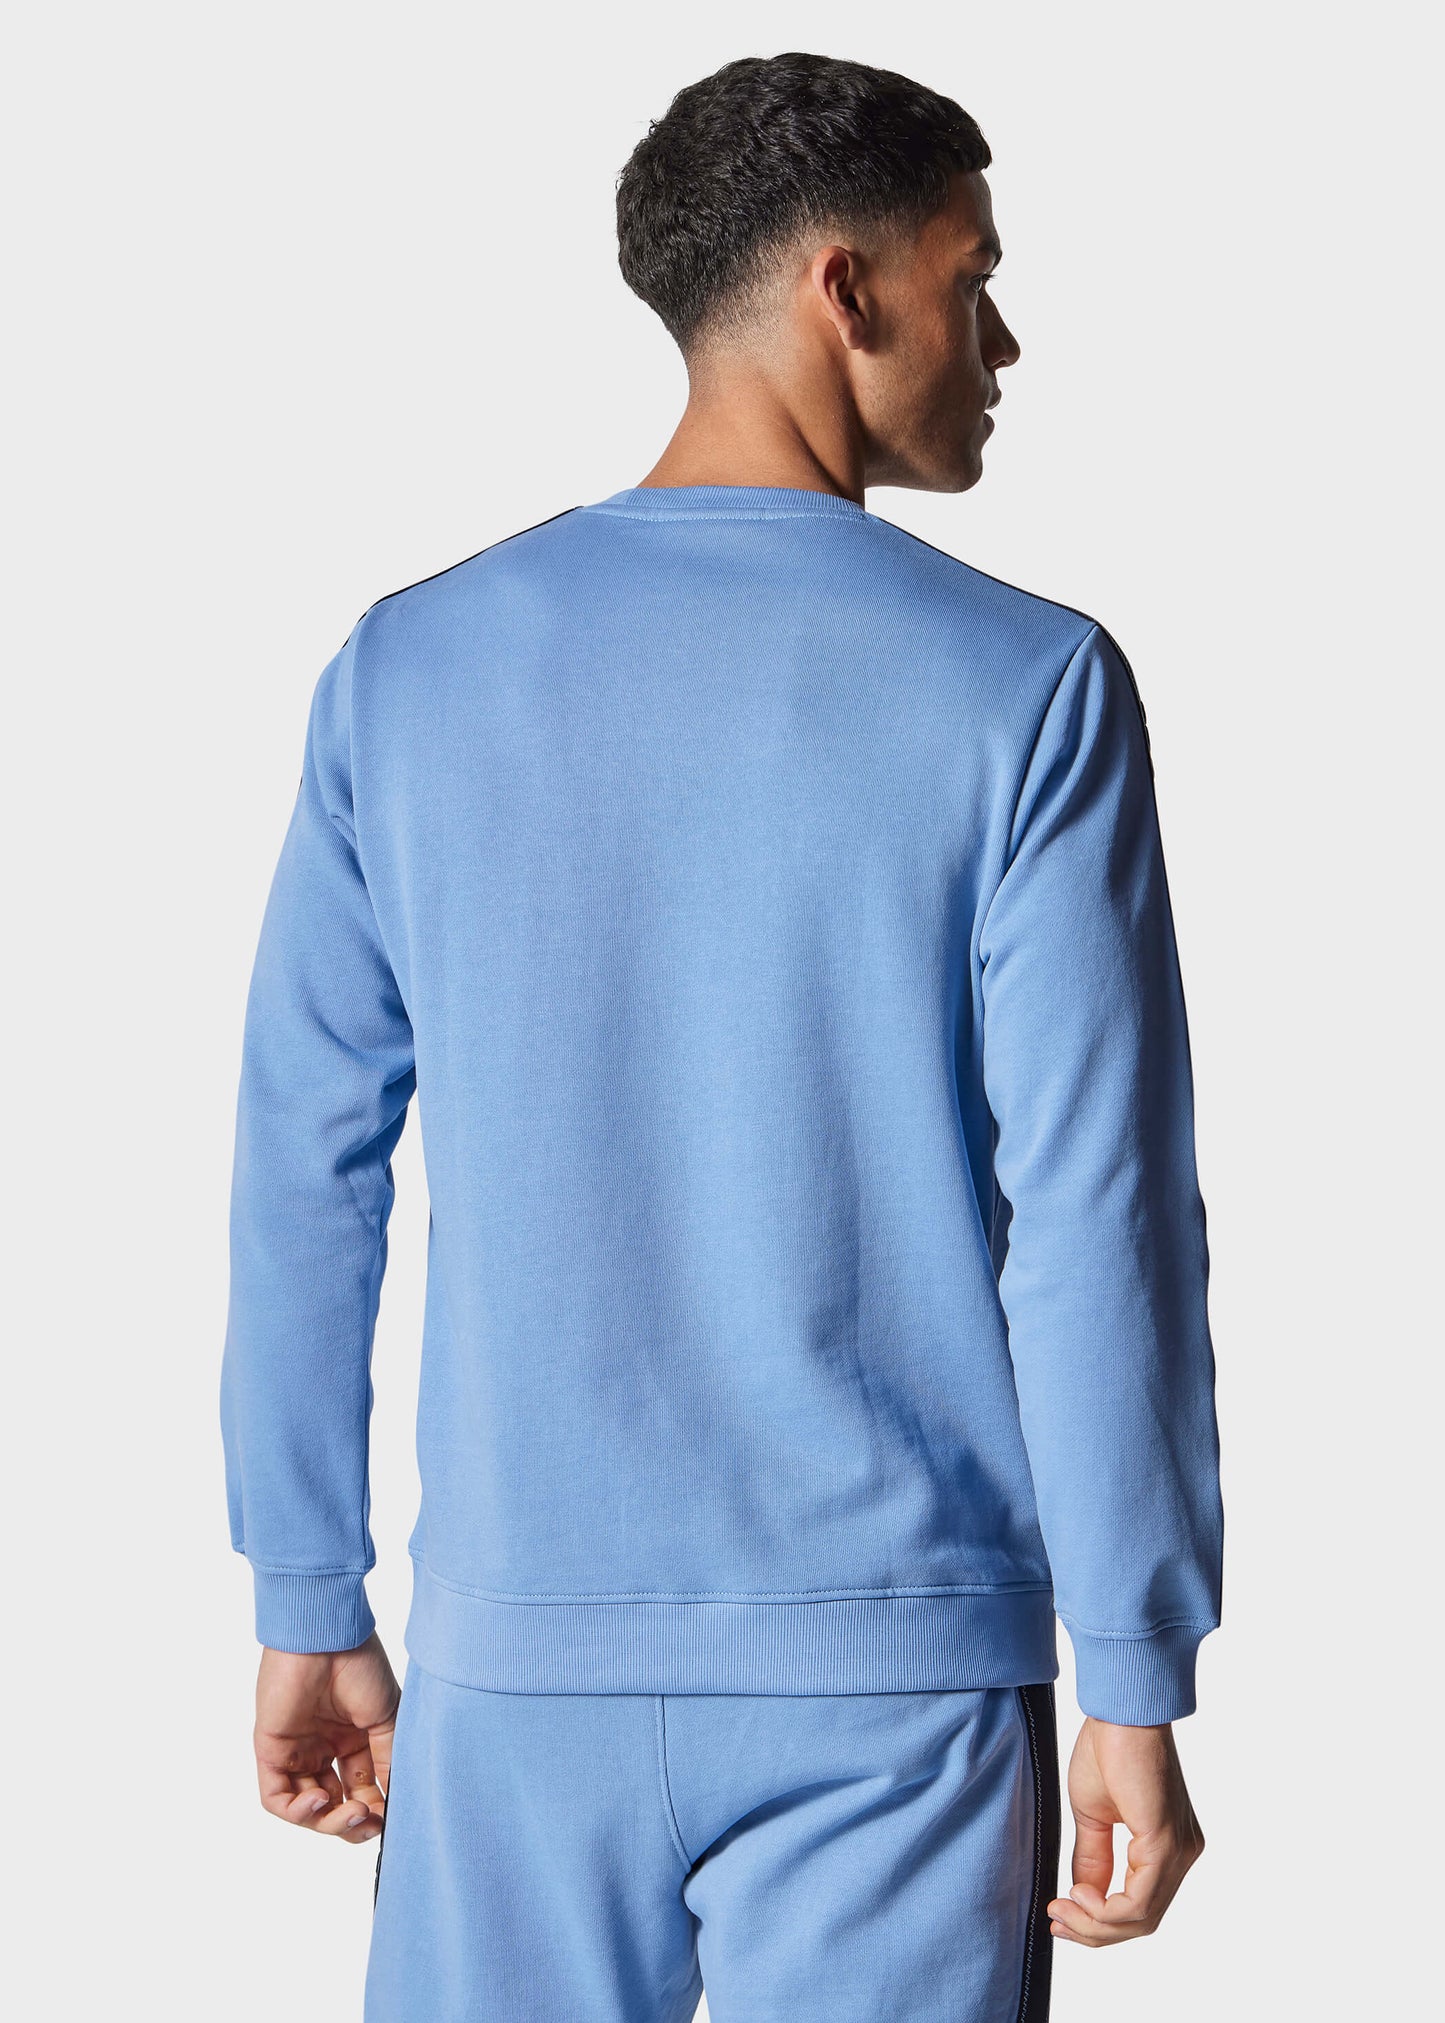 Alinea Tranquil Blue Sweatshirt